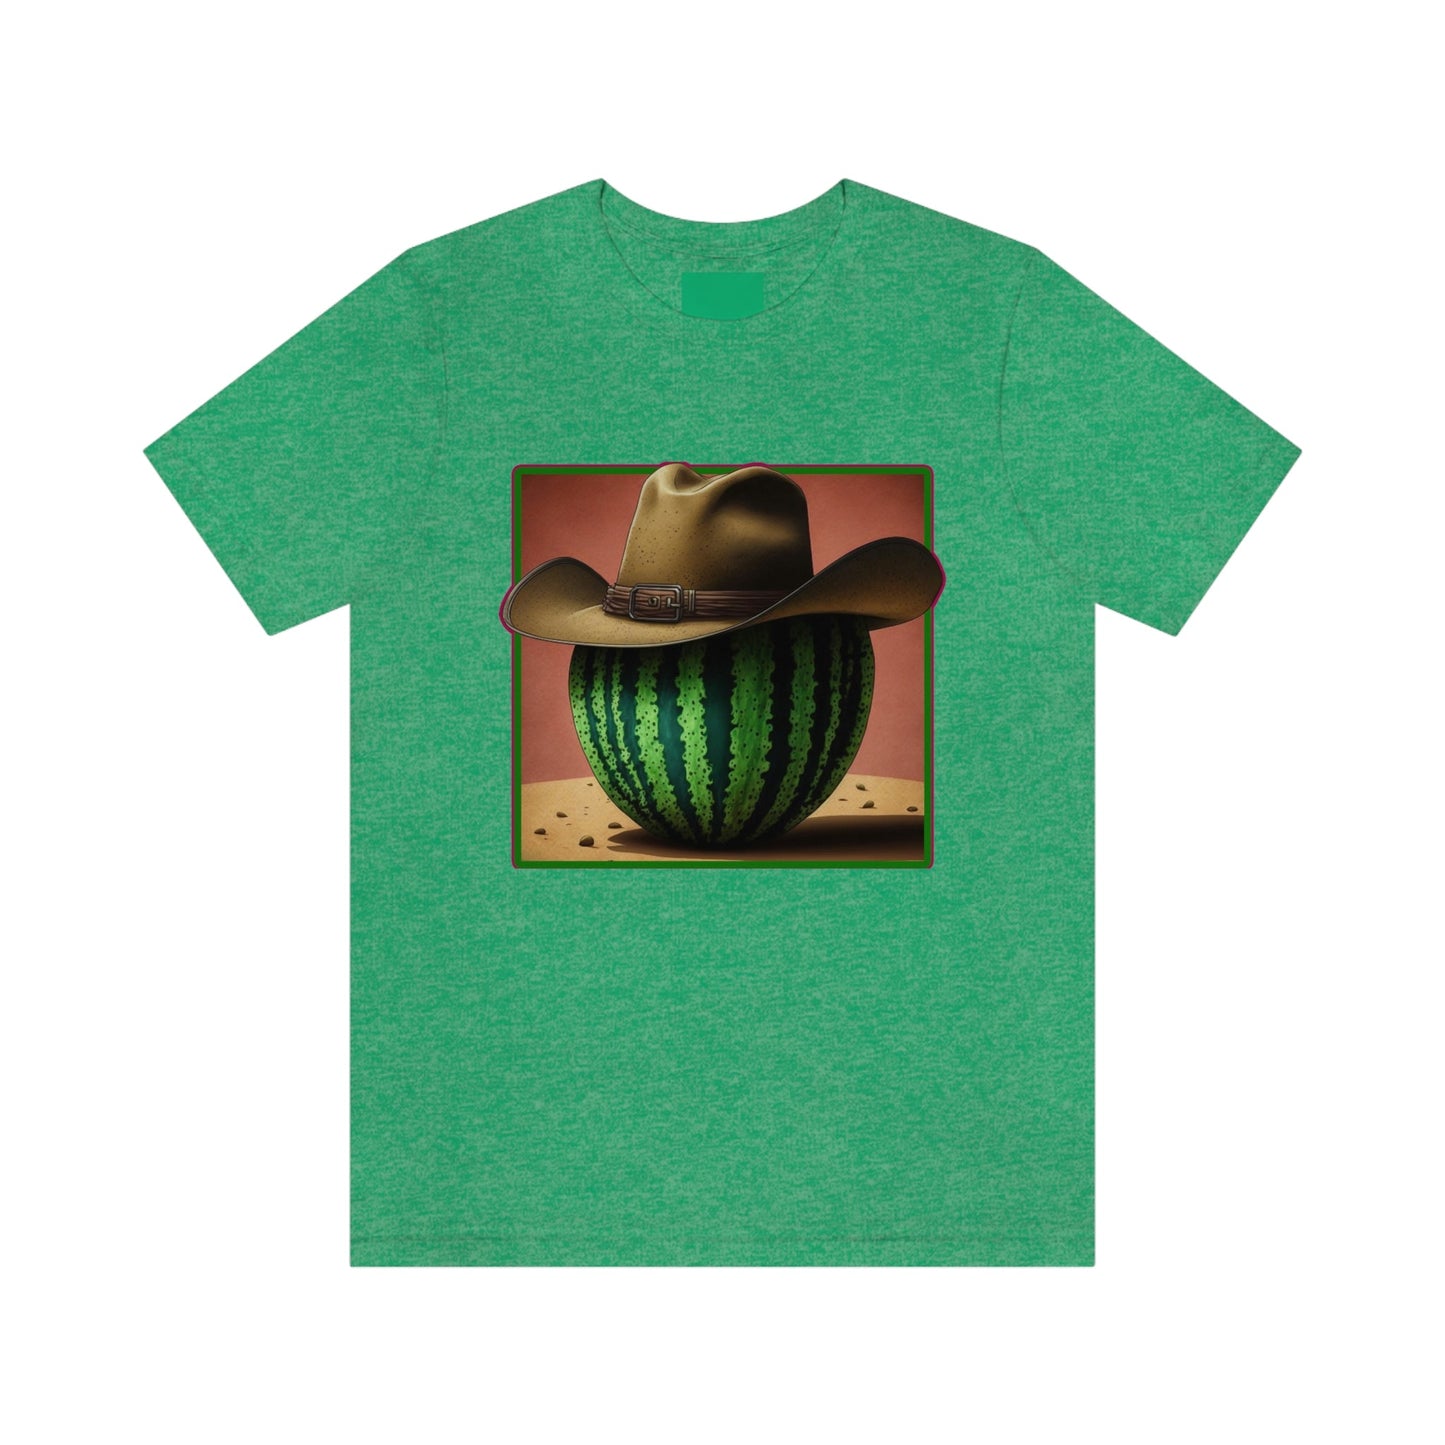 Cowboy Watermelon Tee - The Boss - Bind on Equip - 30769066992586839776